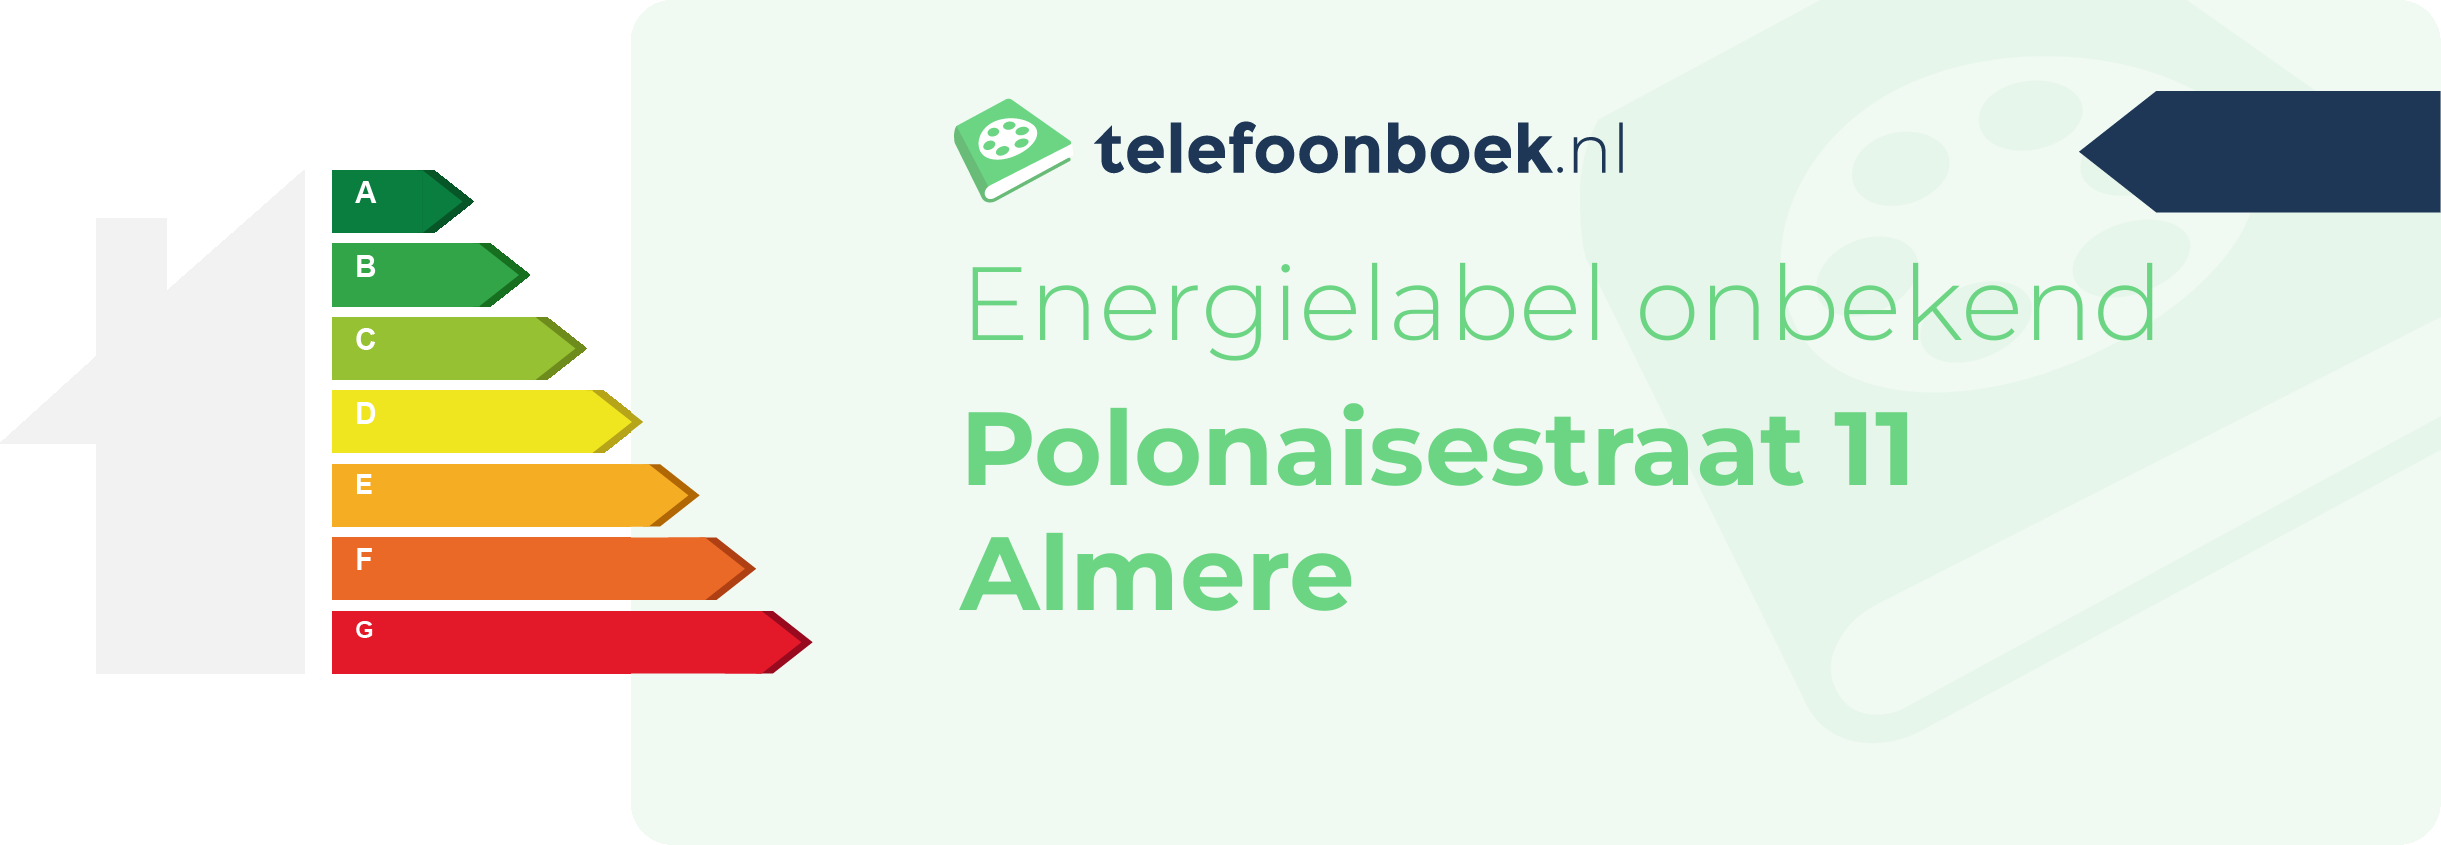 Energielabel Polonaisestraat 11 Almere